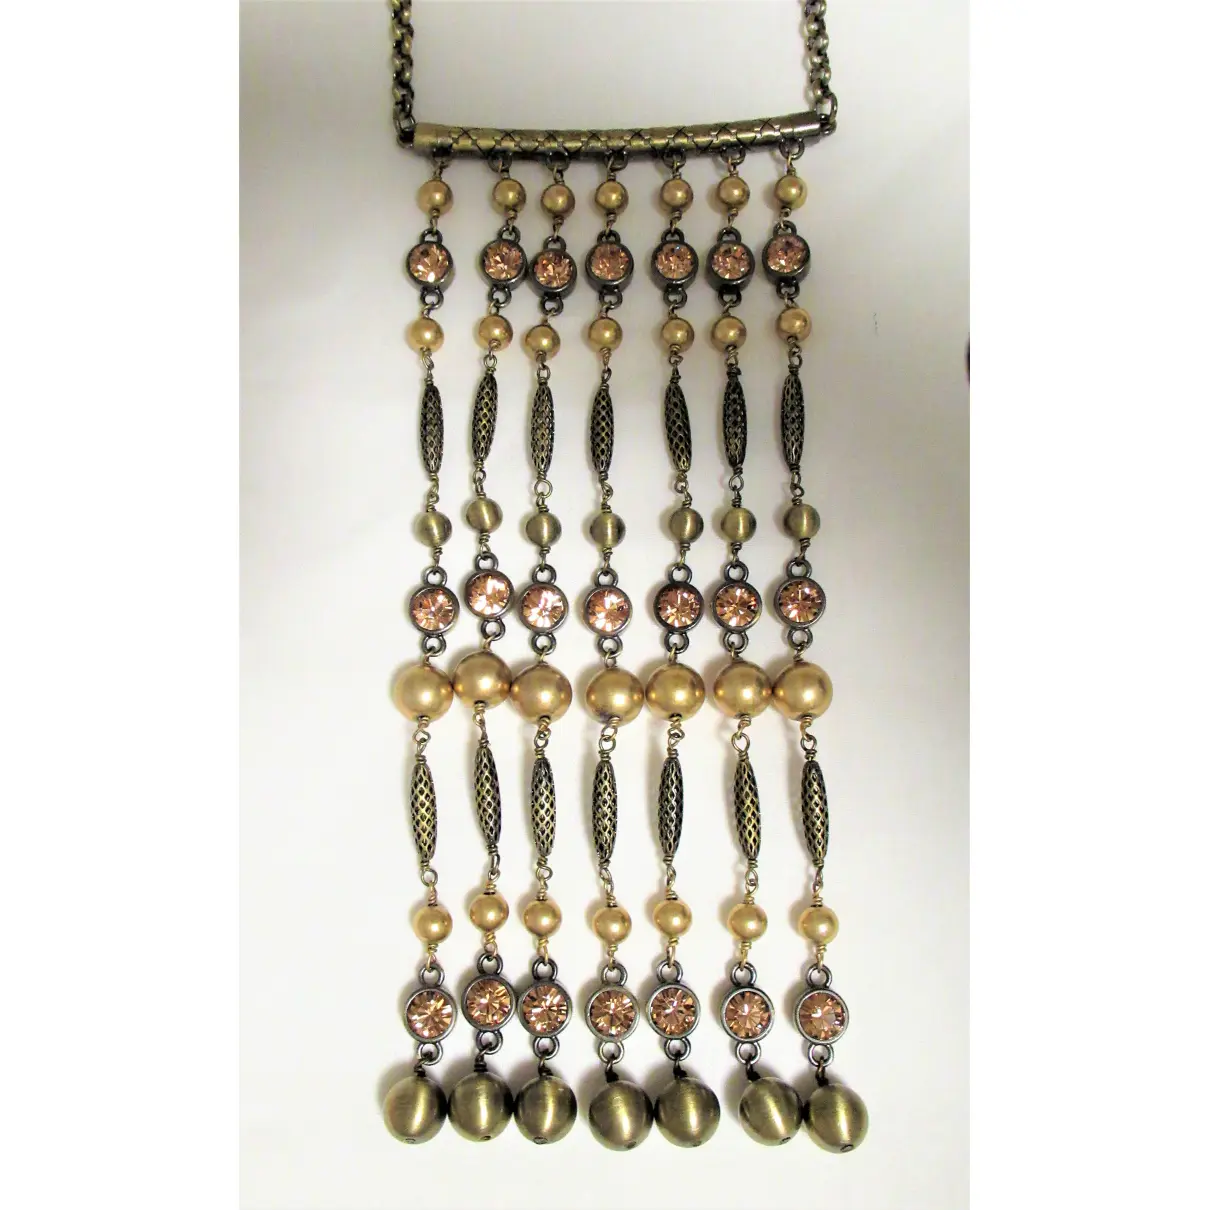 Buy Dyrberg/Kern Crystal necklace online